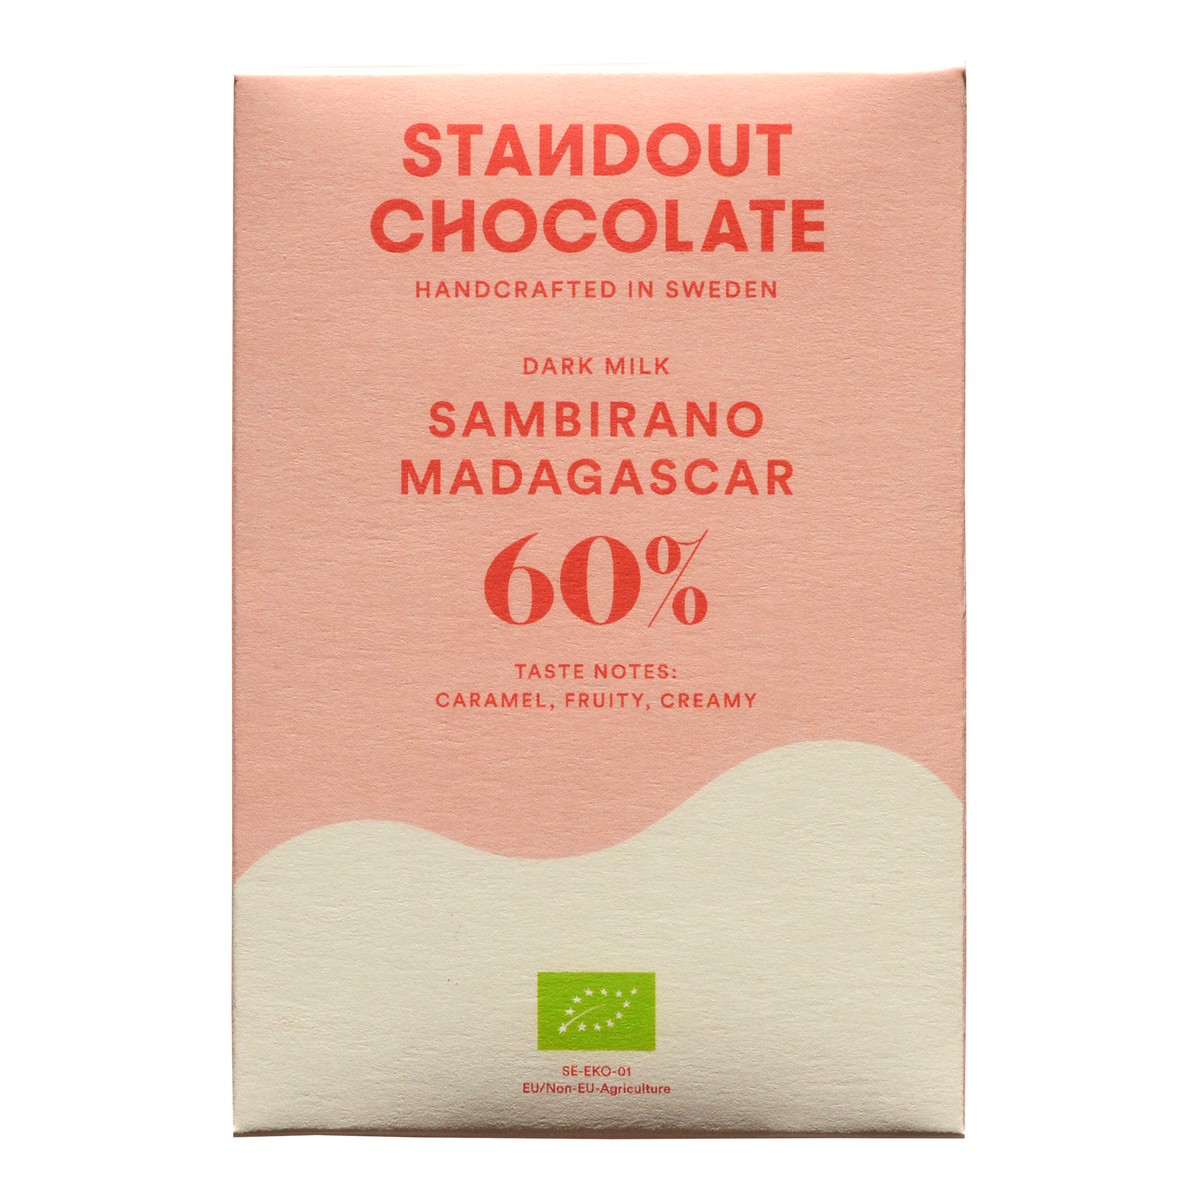 Standout Chocolate Sambirano Madagascar 60% Dark Milk